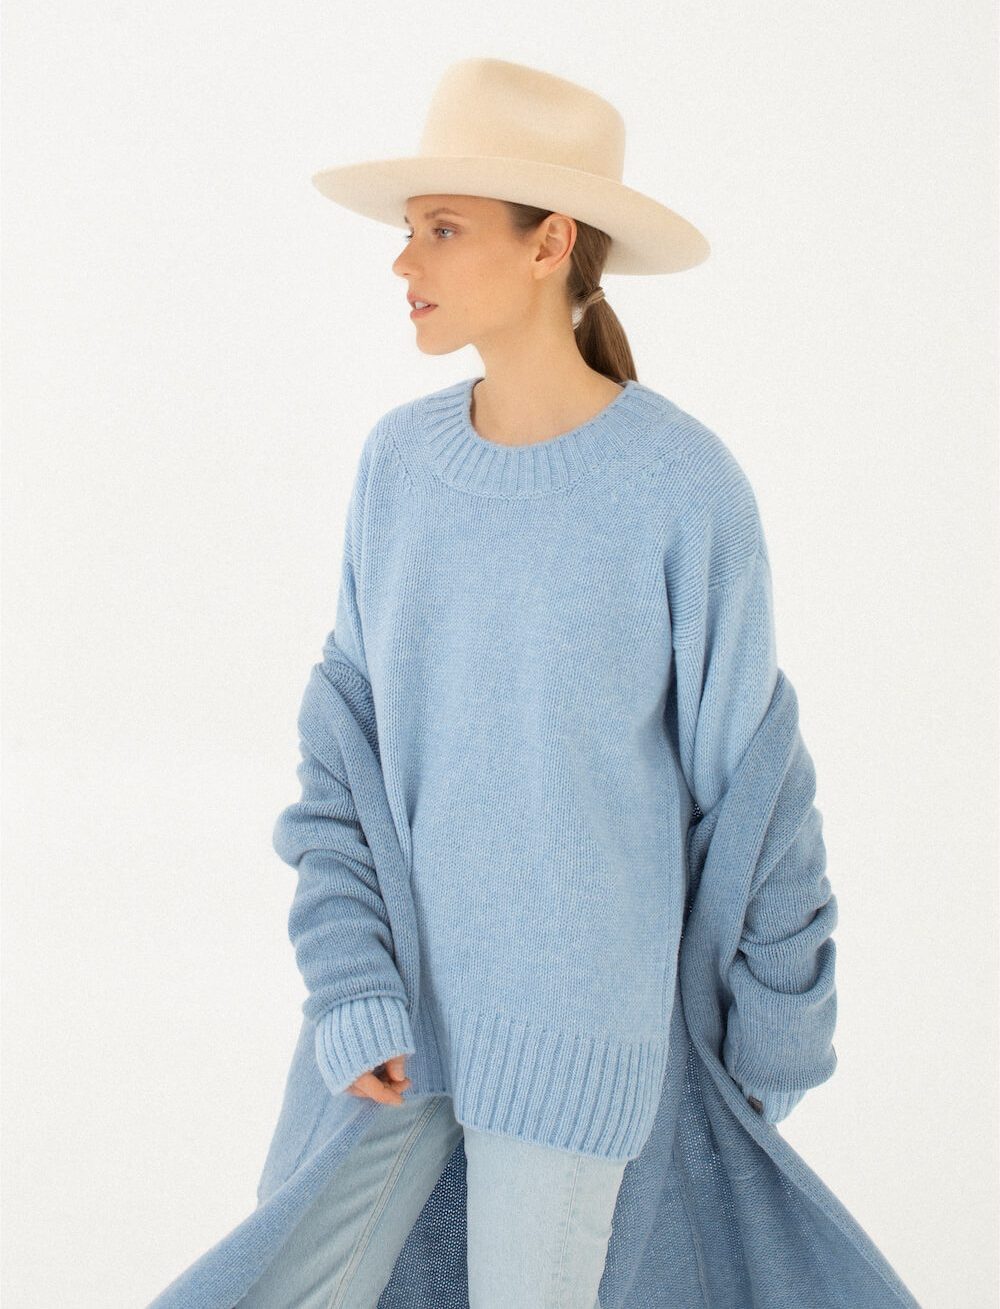 fine wool knitted sweater jumper